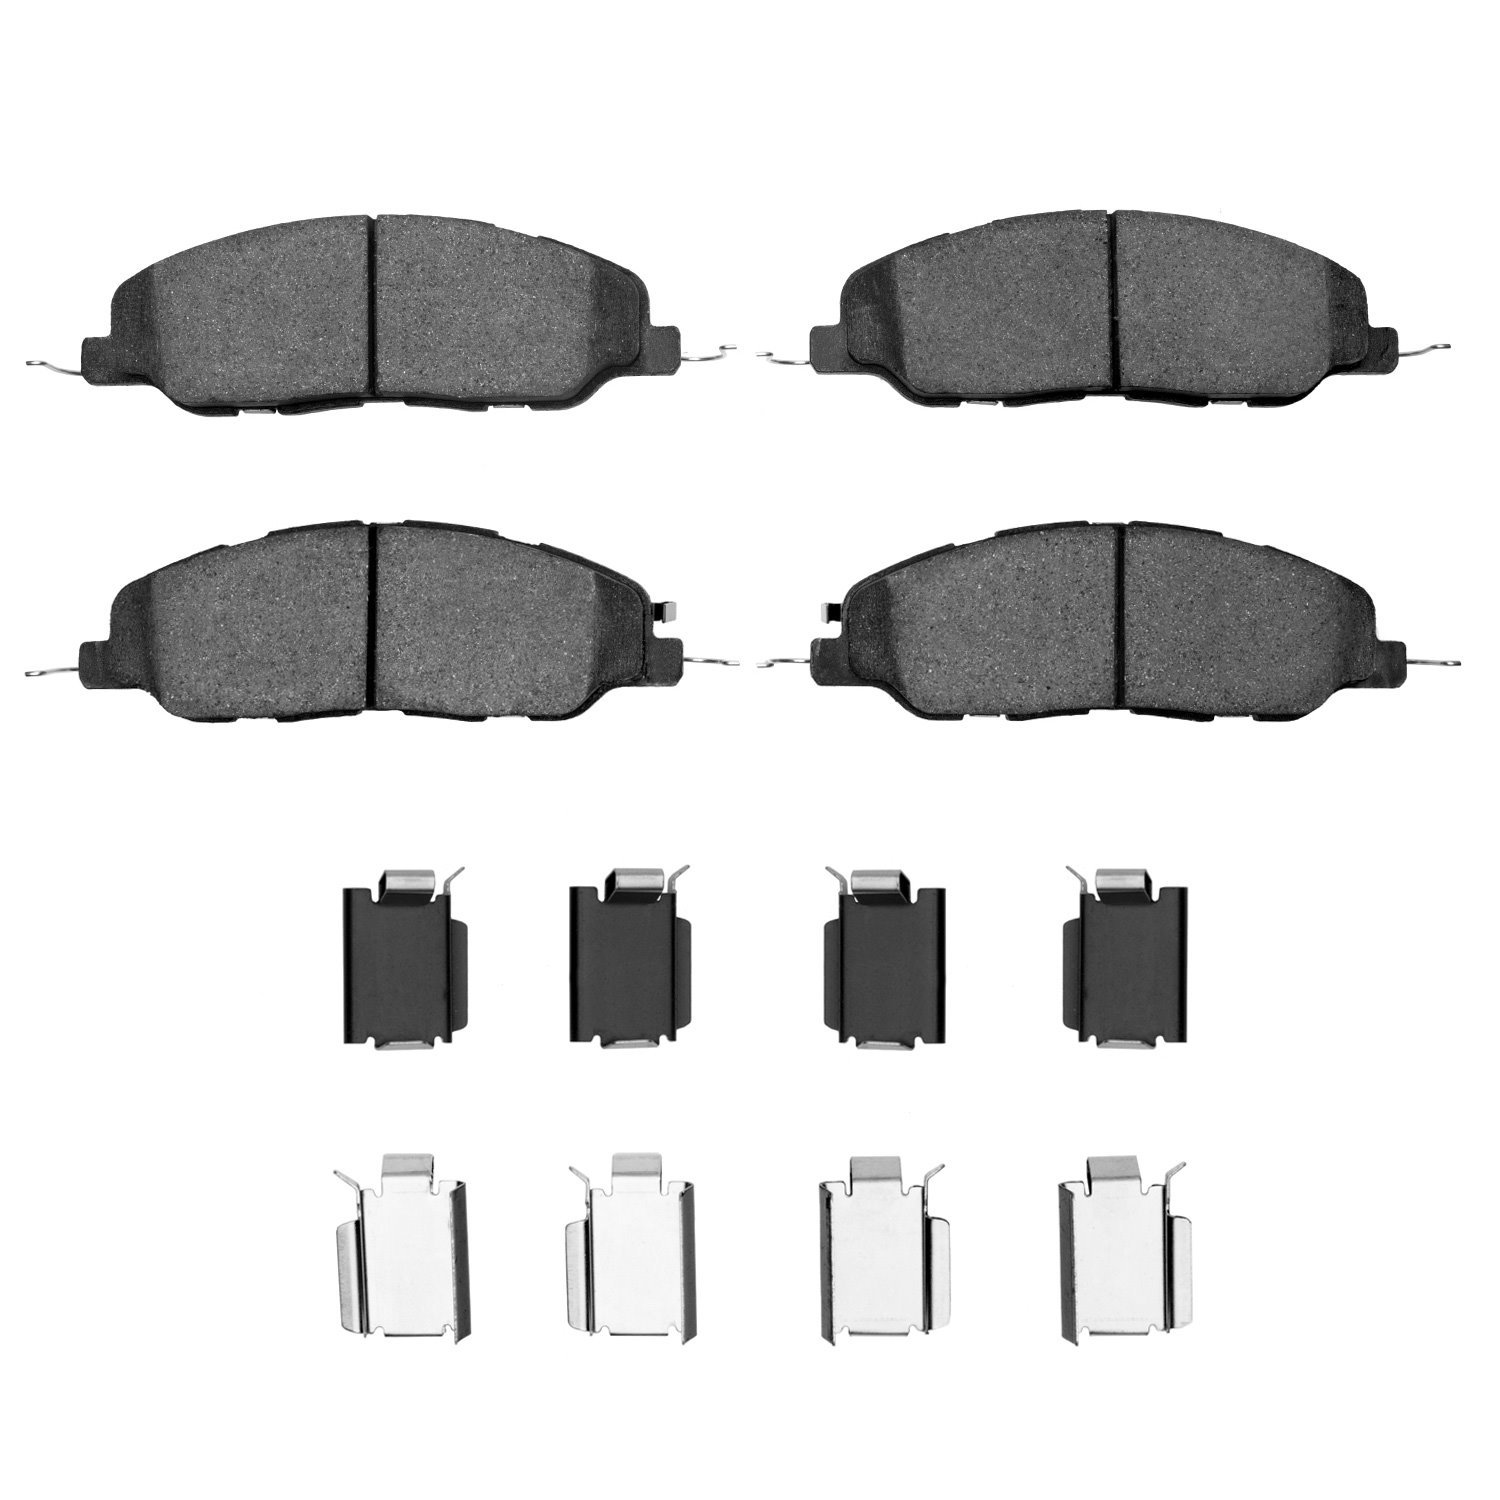 1310-1463-01 3000-Series Ceramic Brake Pads & Hardware Kit, 2005-2014 Ford/Lincoln/Mercury/Mazda, Position: Front